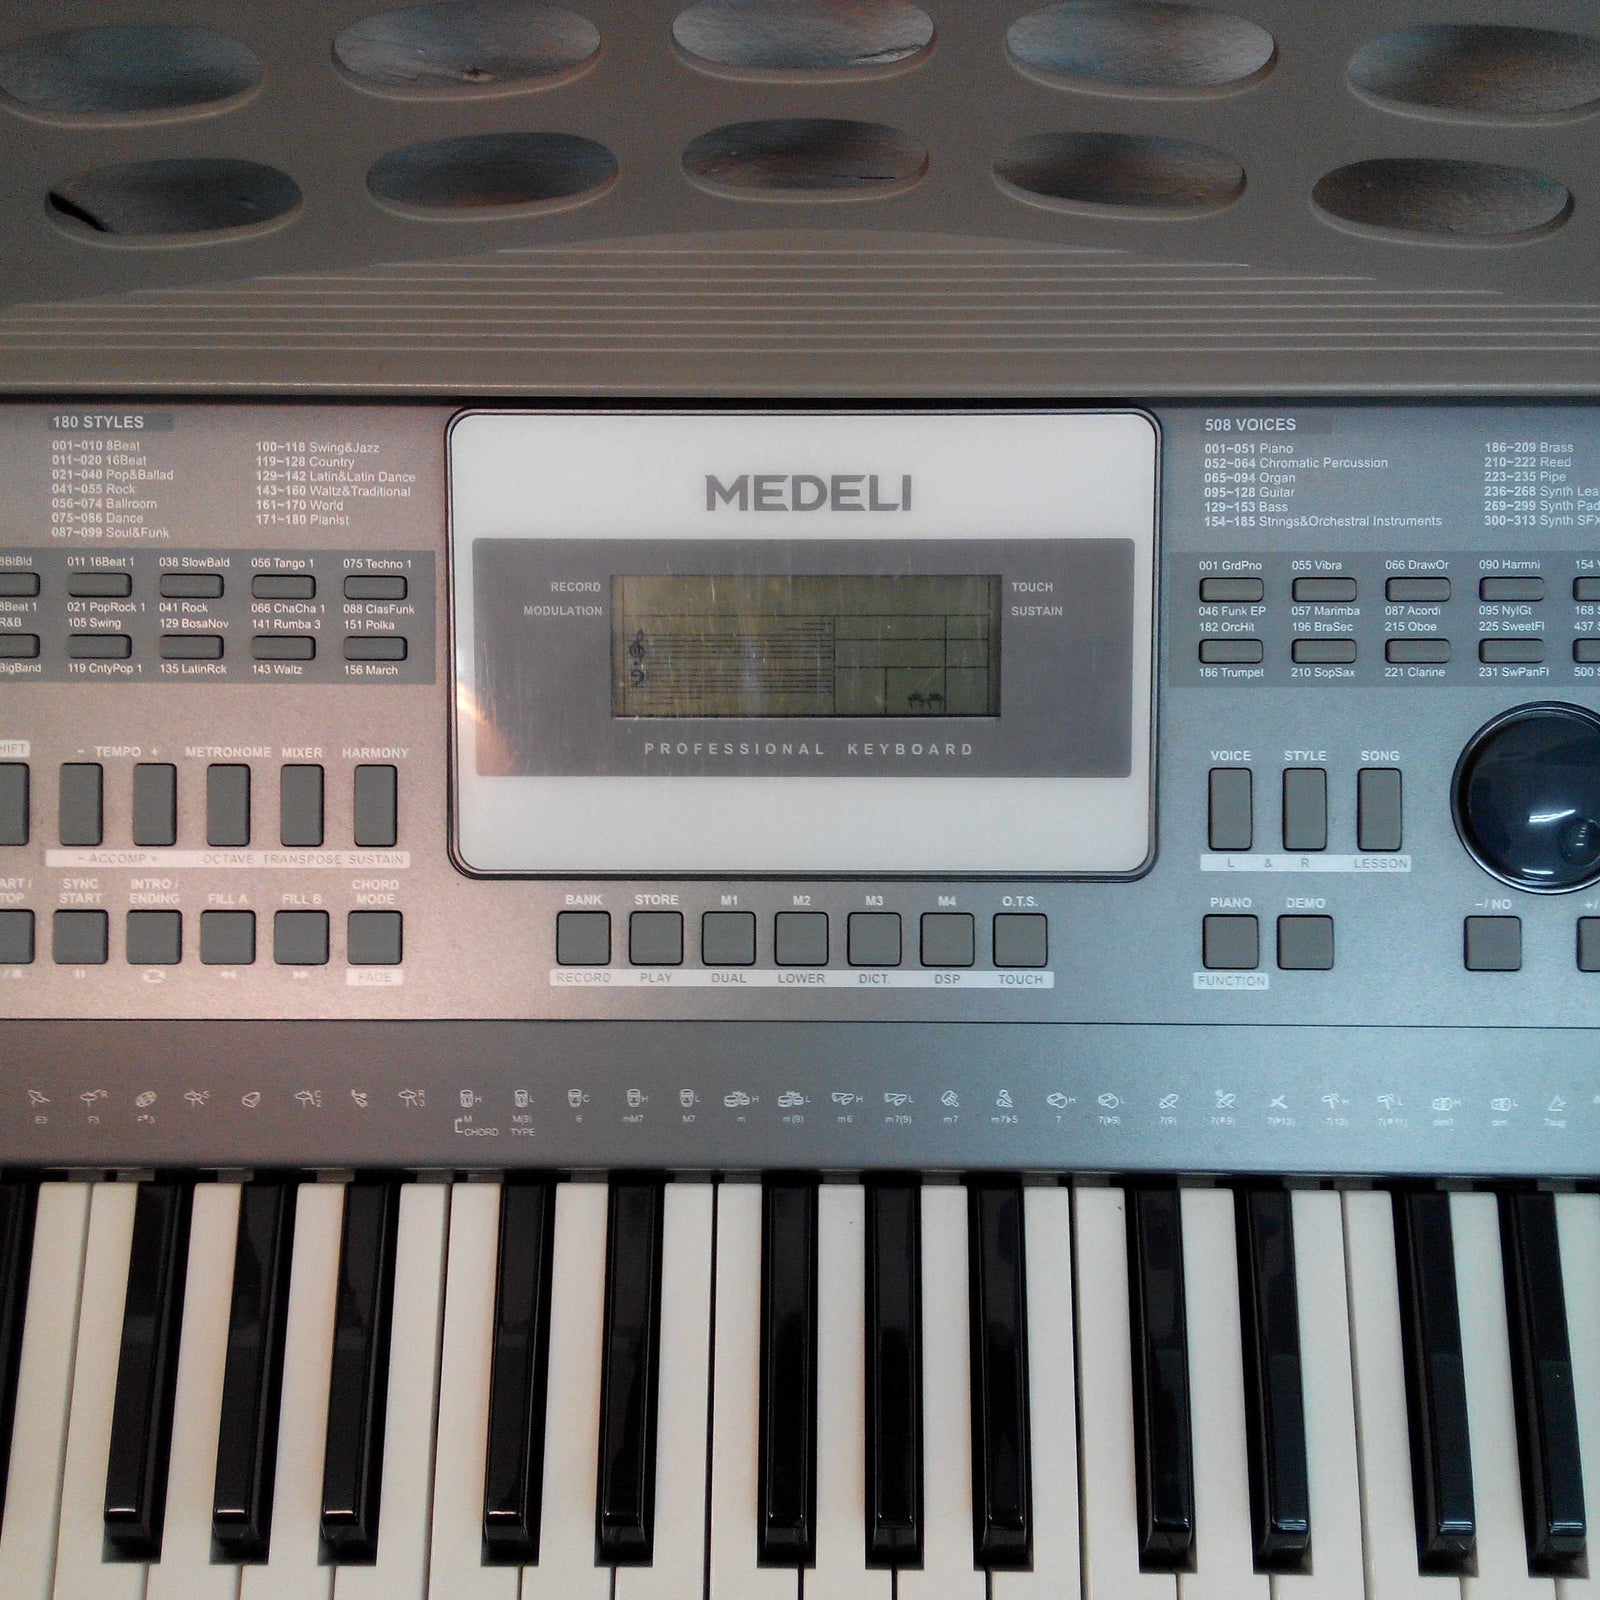 Medeli A100 61-key Keyboard